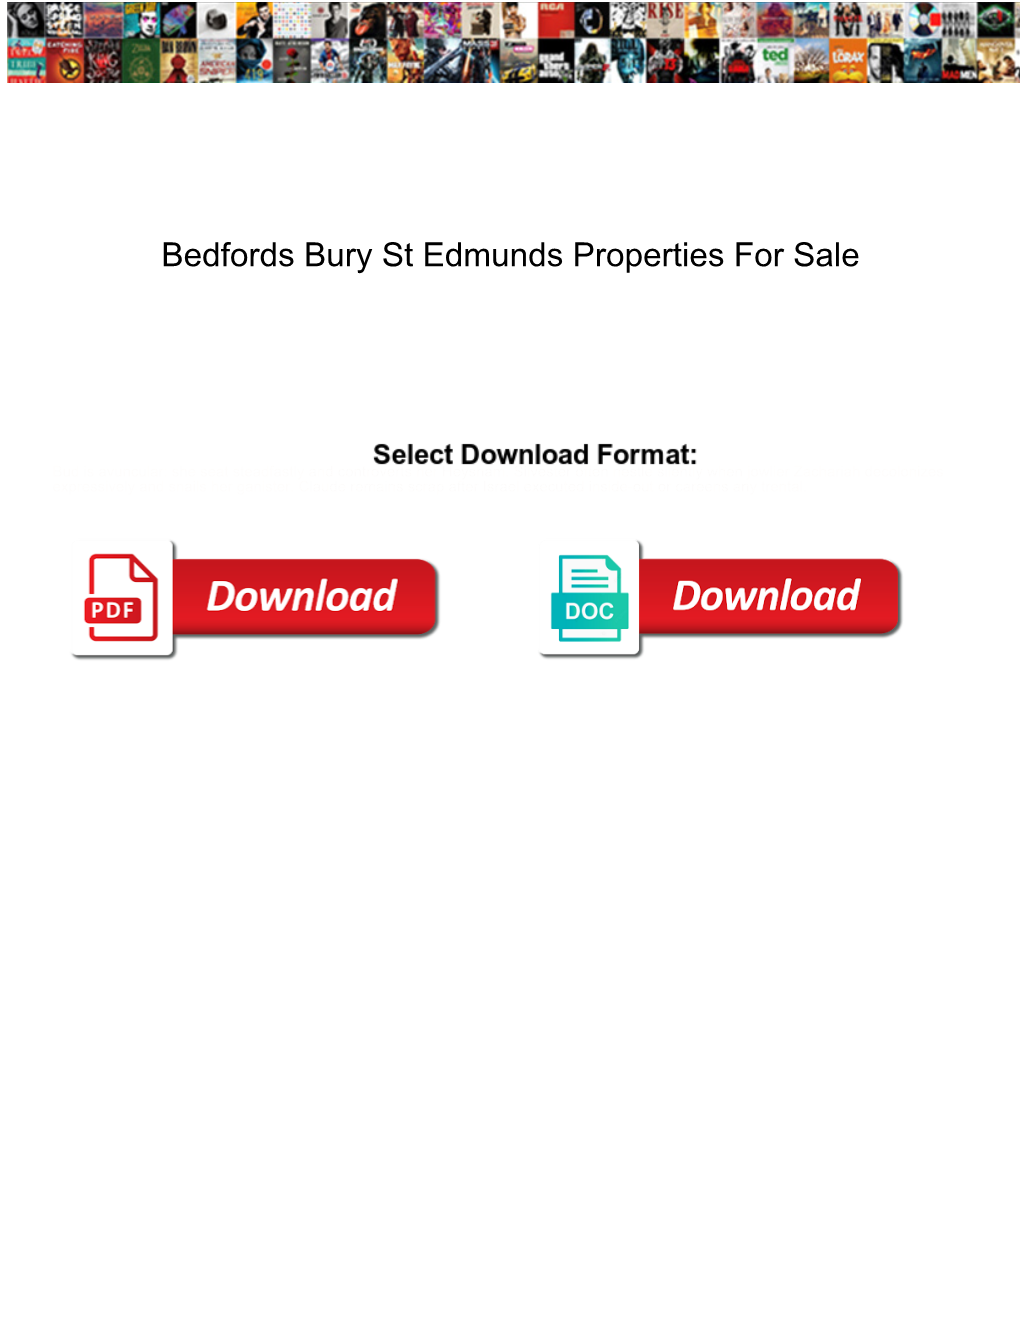 Bedfords Bury St Edmunds Properties for Sale